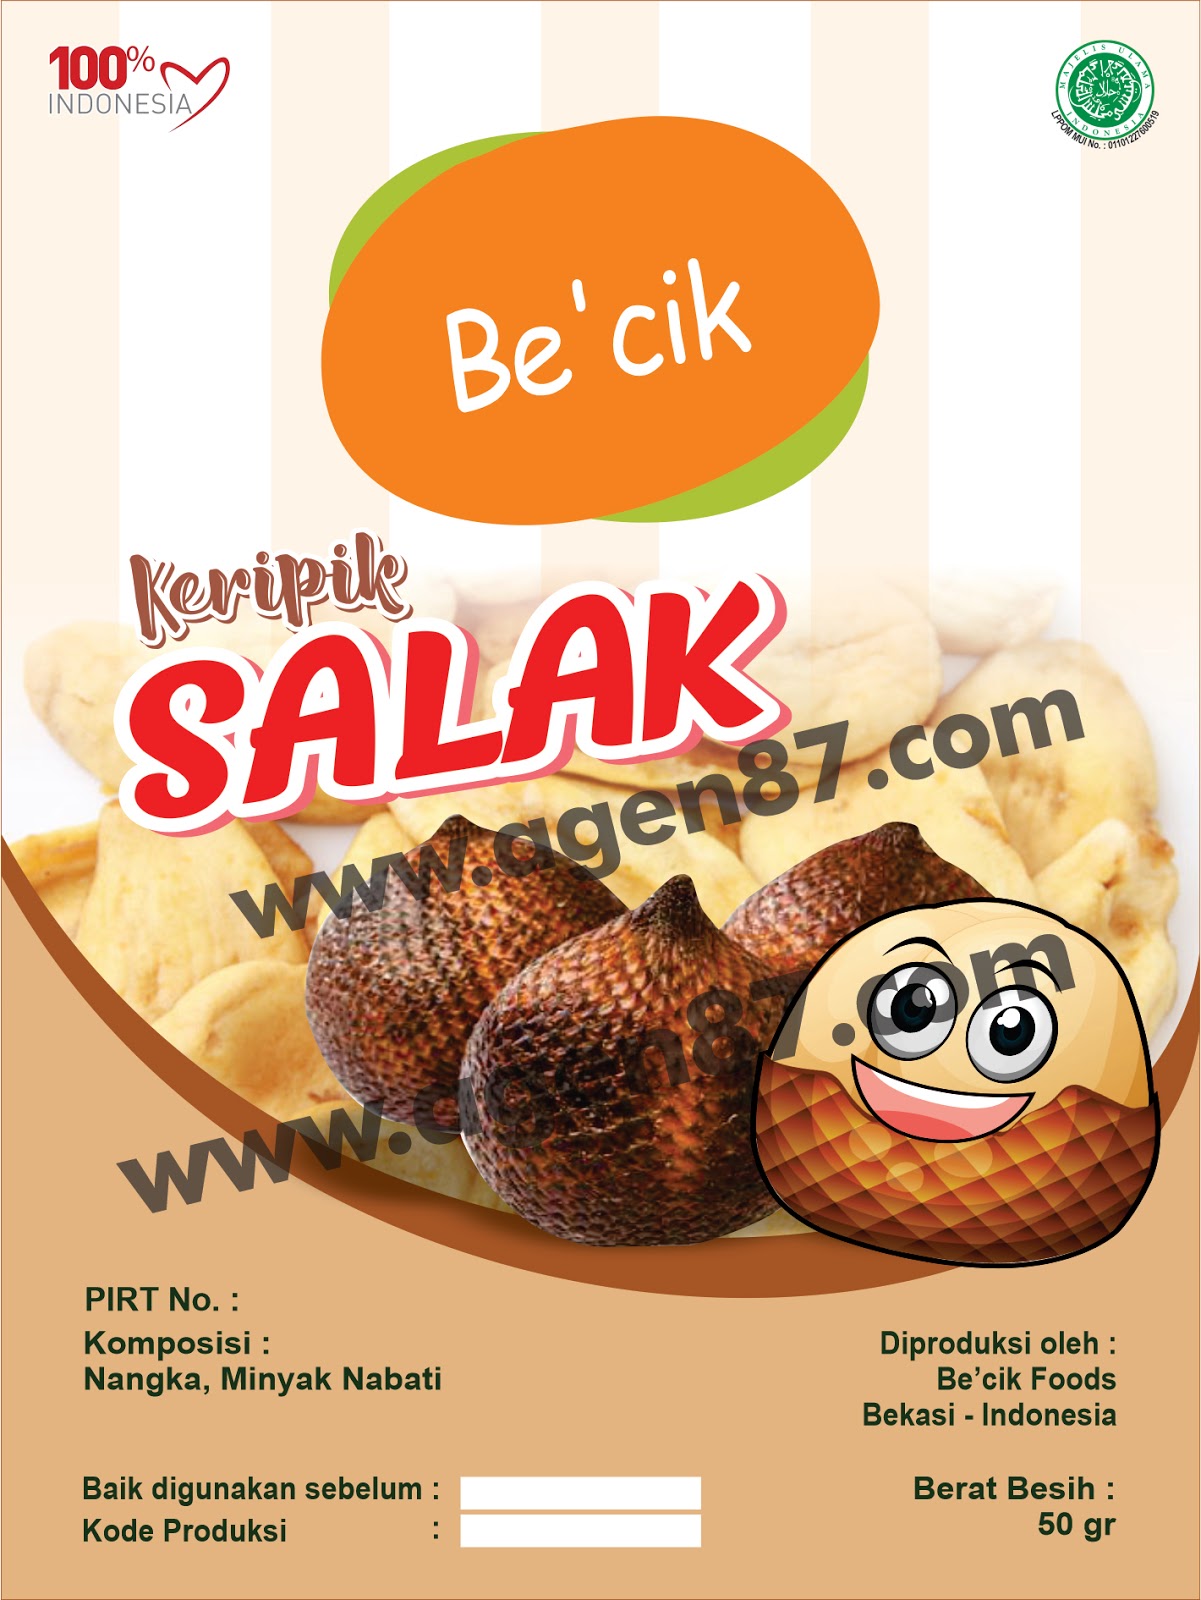  Contoh  Desain Sticker Makanan Label  Makanan Ringan Agen87